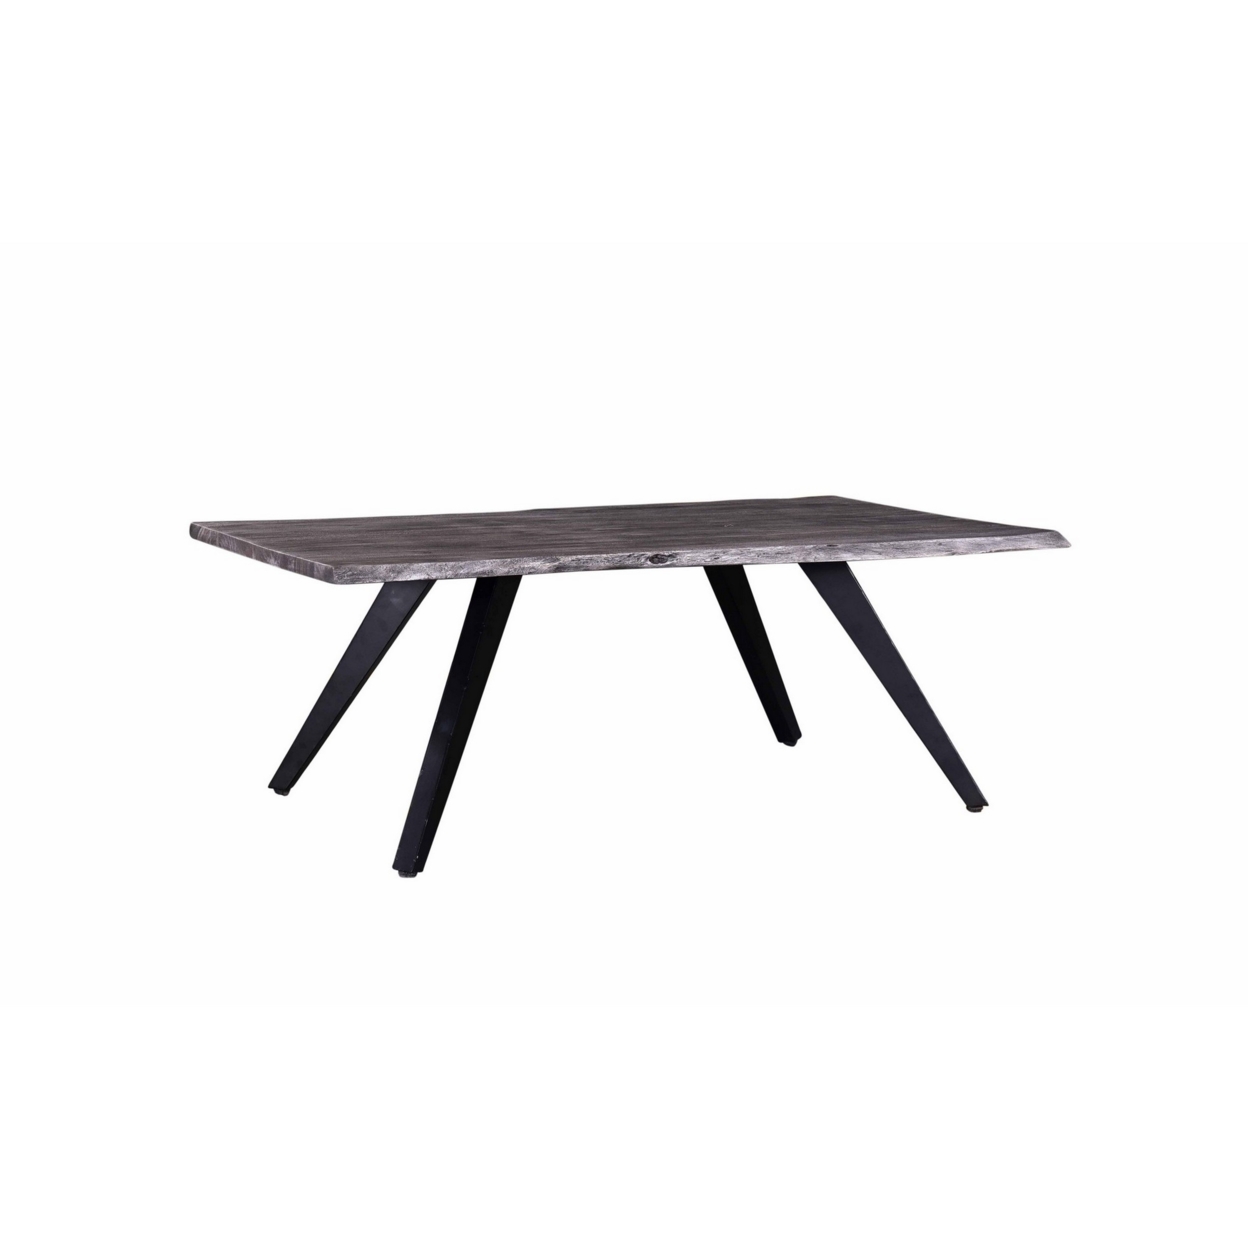 Chad 48 Inch Coffee Table, Dark Gray Acacia Wood Top, Black Angled Legs- Saltoro Sherpi